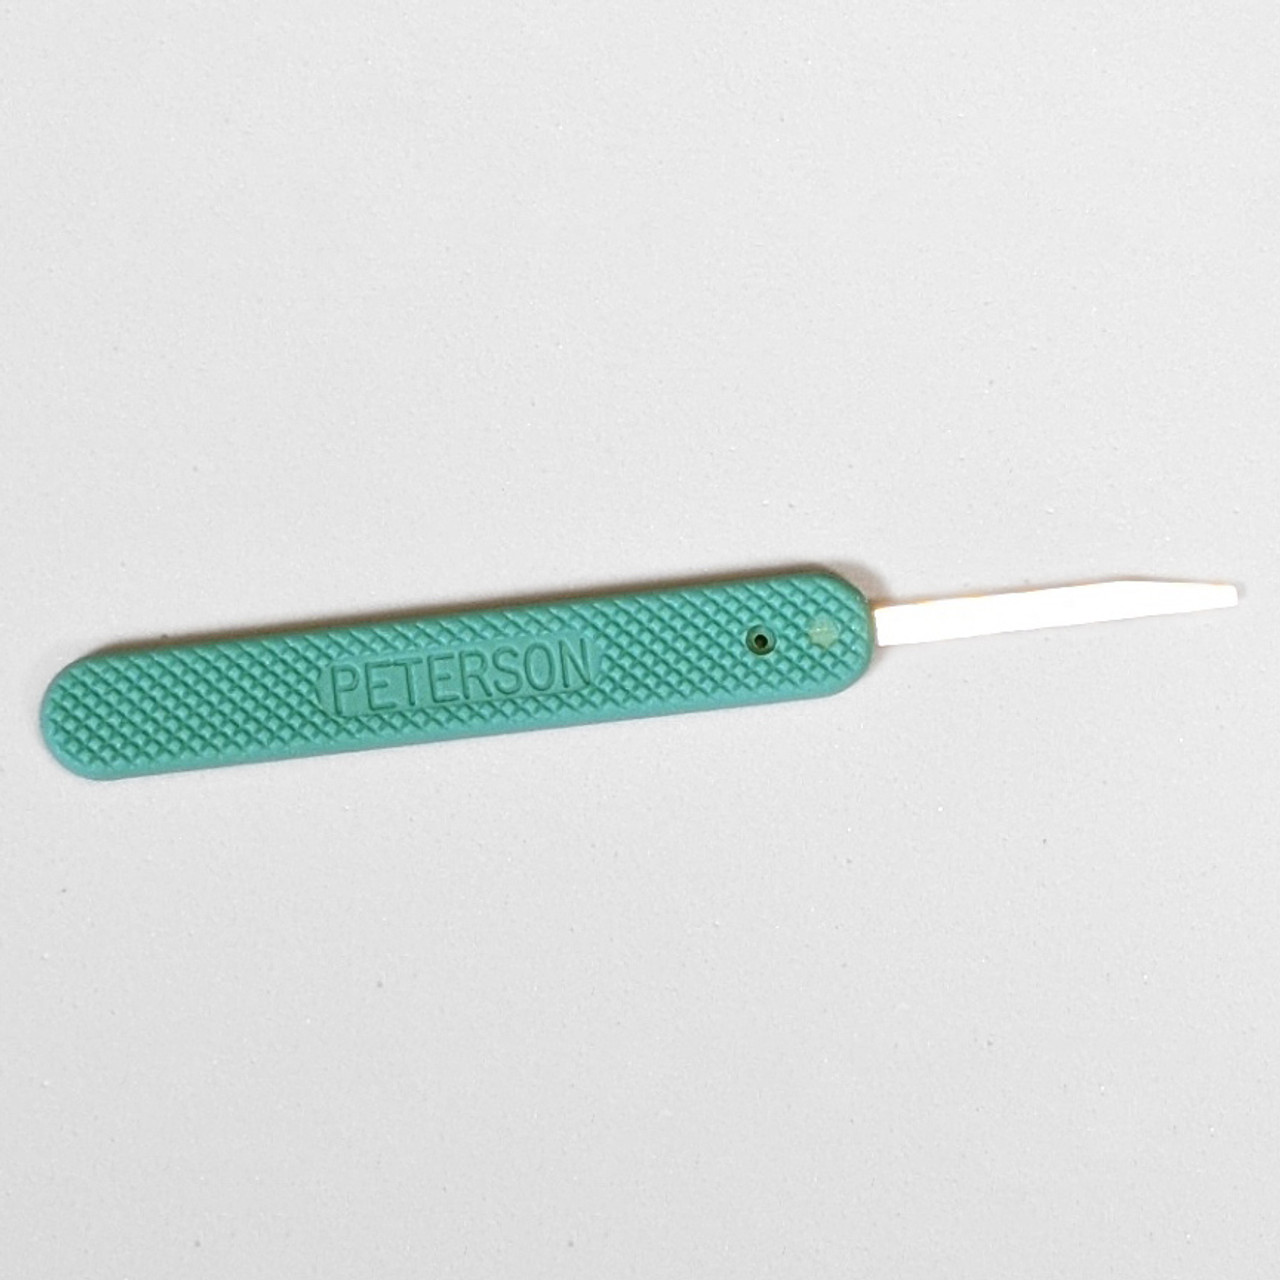 Peterson Mini Knife Tool - Set of 3 